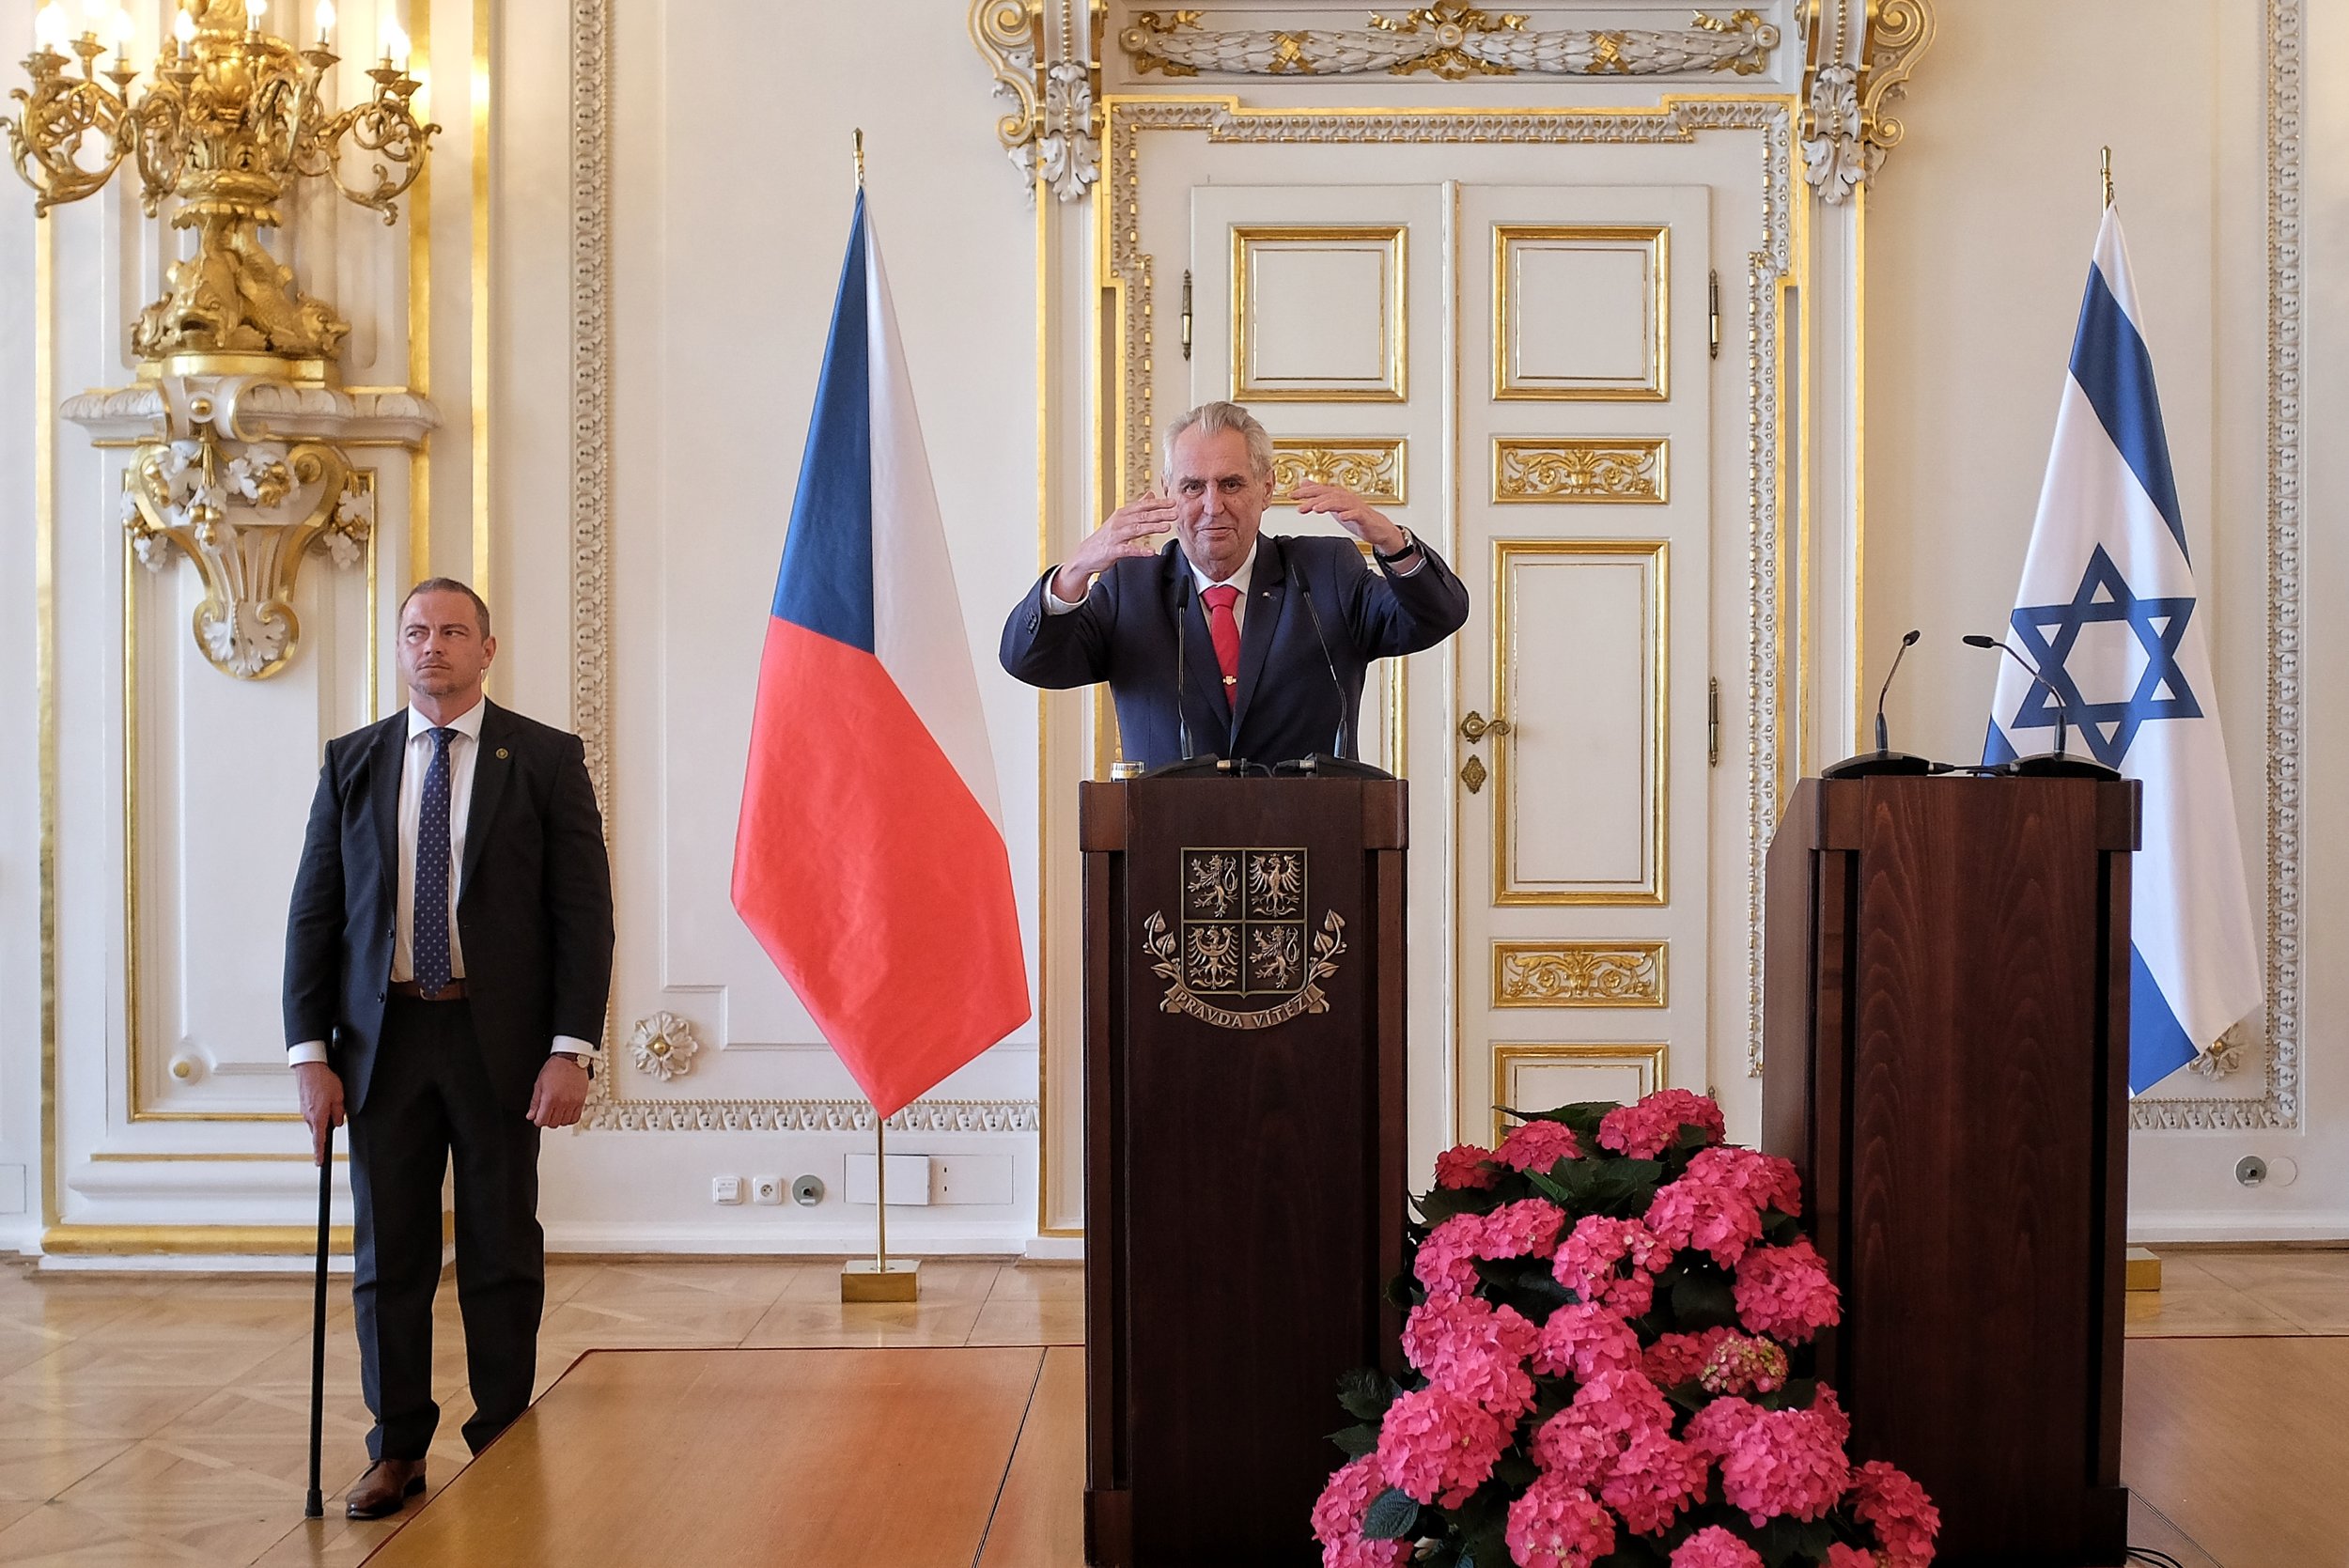  Czech president Miloš Zeman hosted Israel’s 70th Independence Day celebration at the Spanish Hall of Prague Castle, 25.4.2018. 